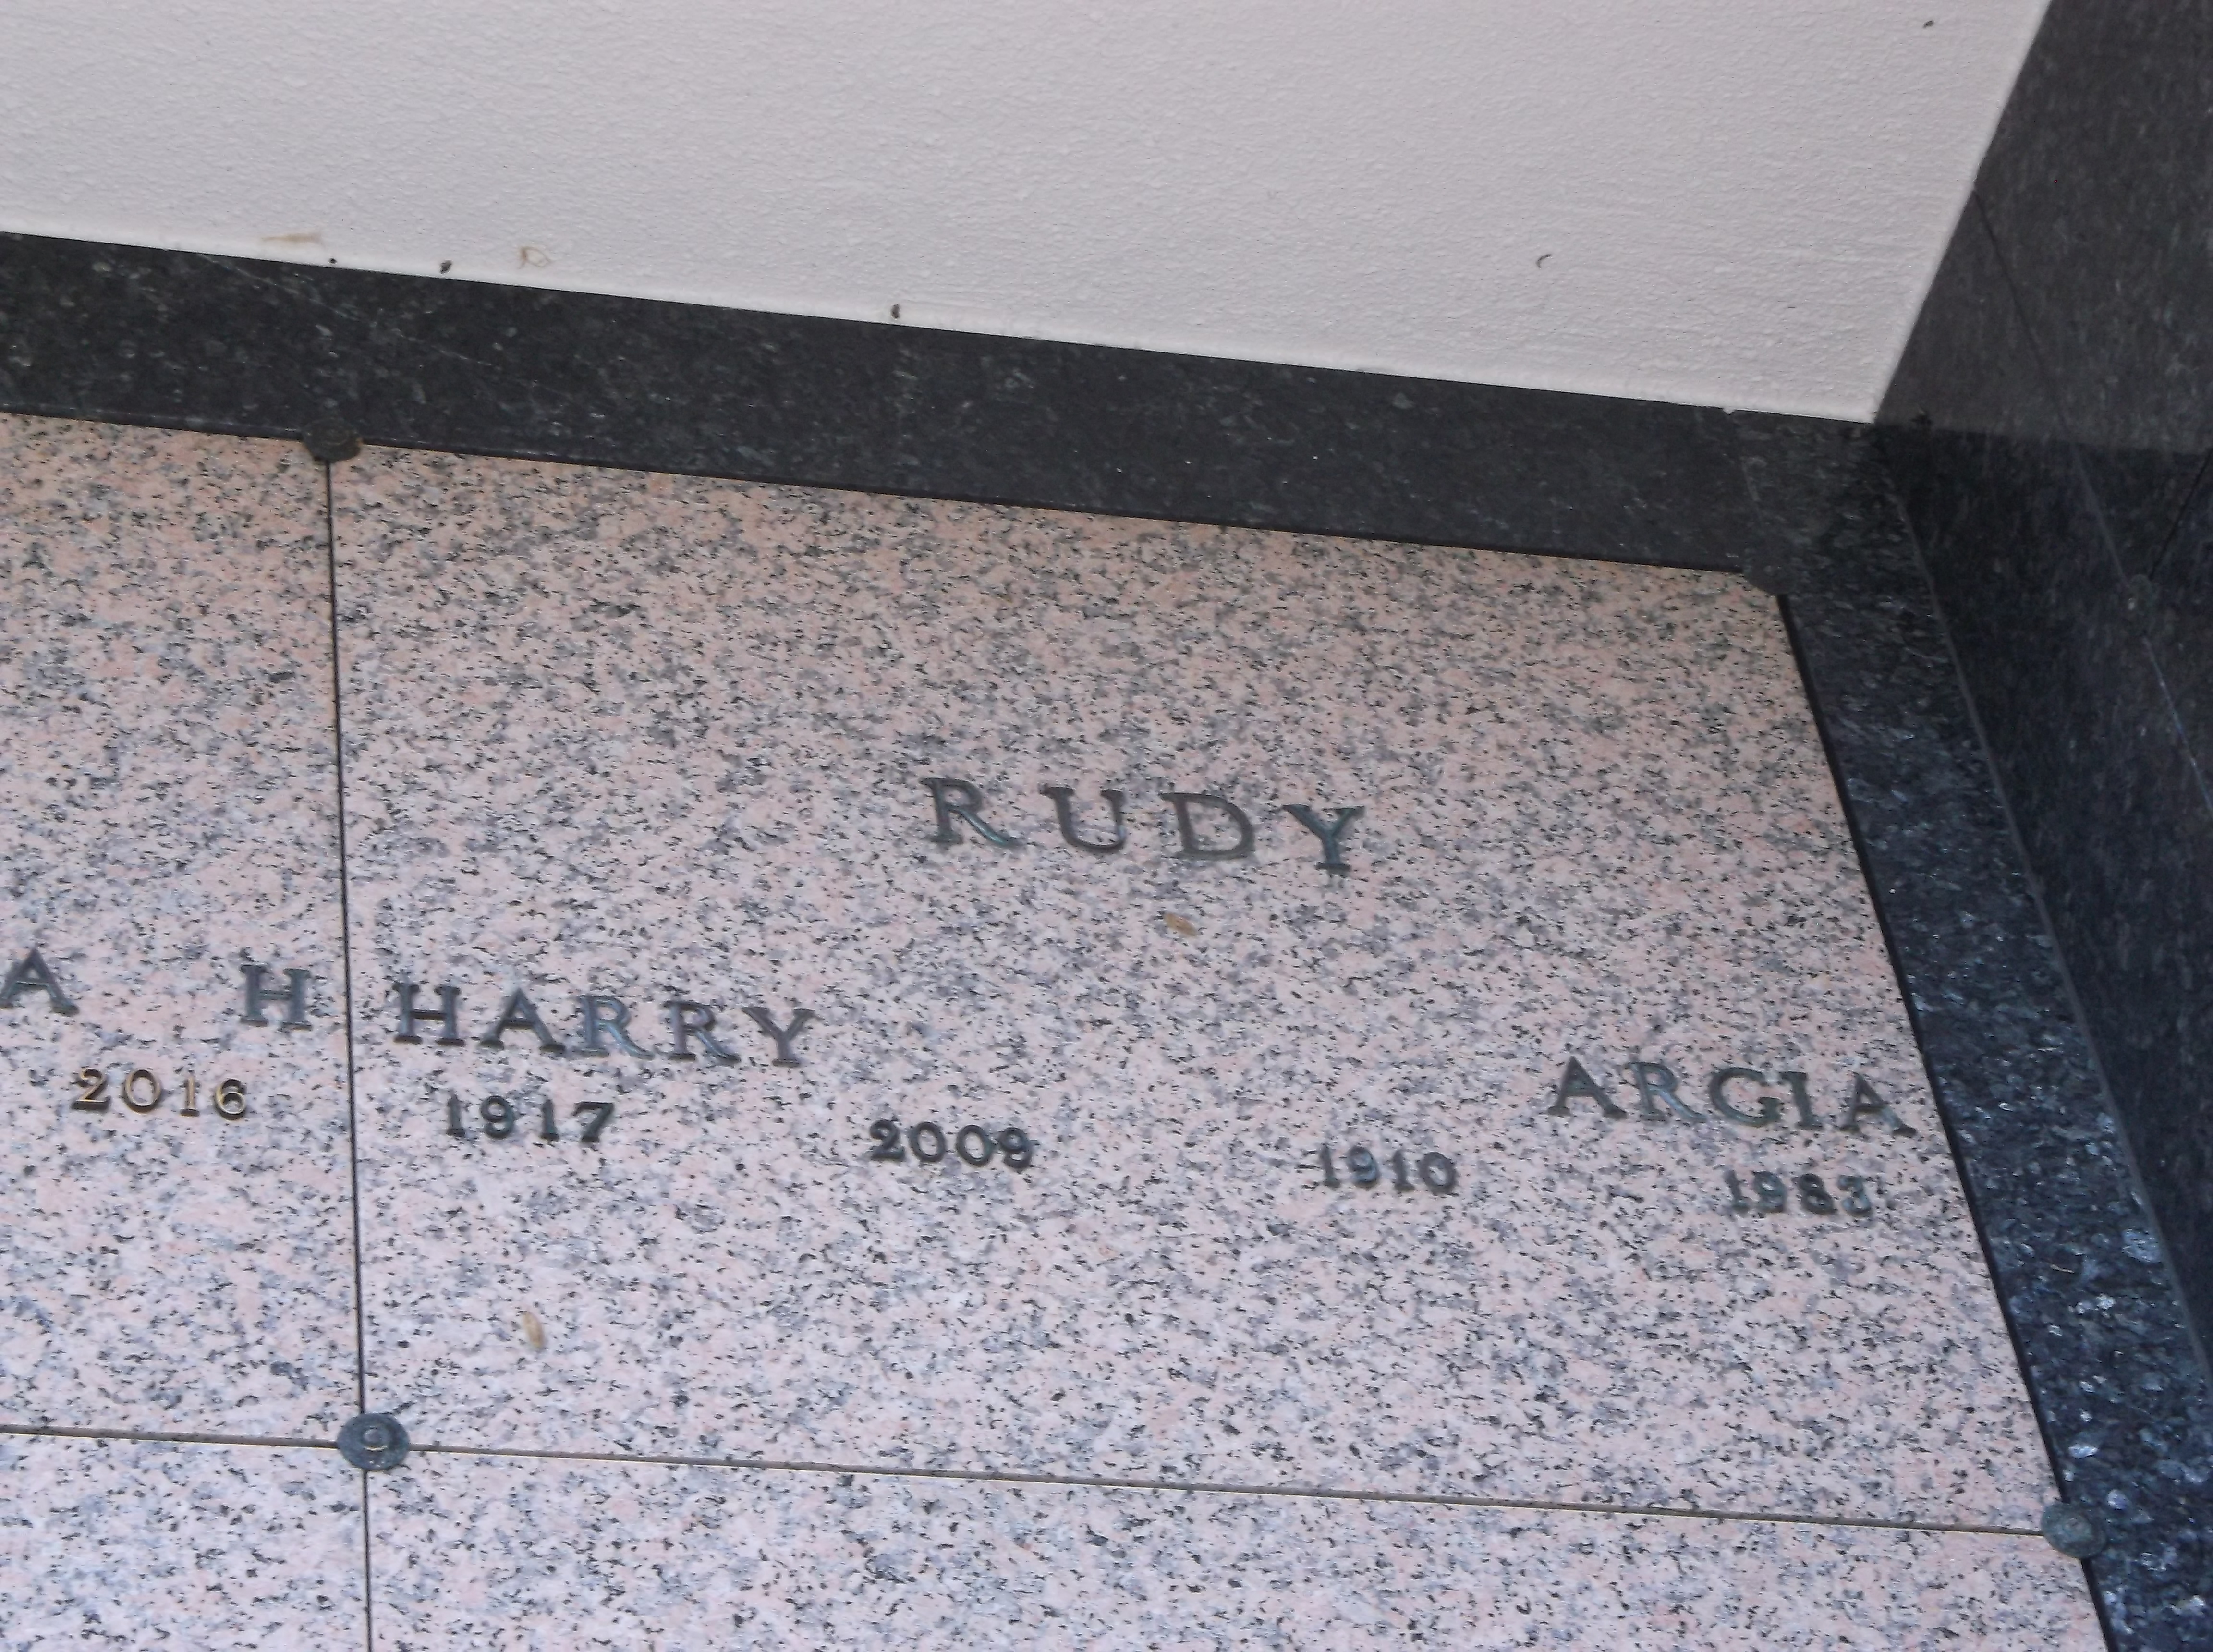 Harry Rudy